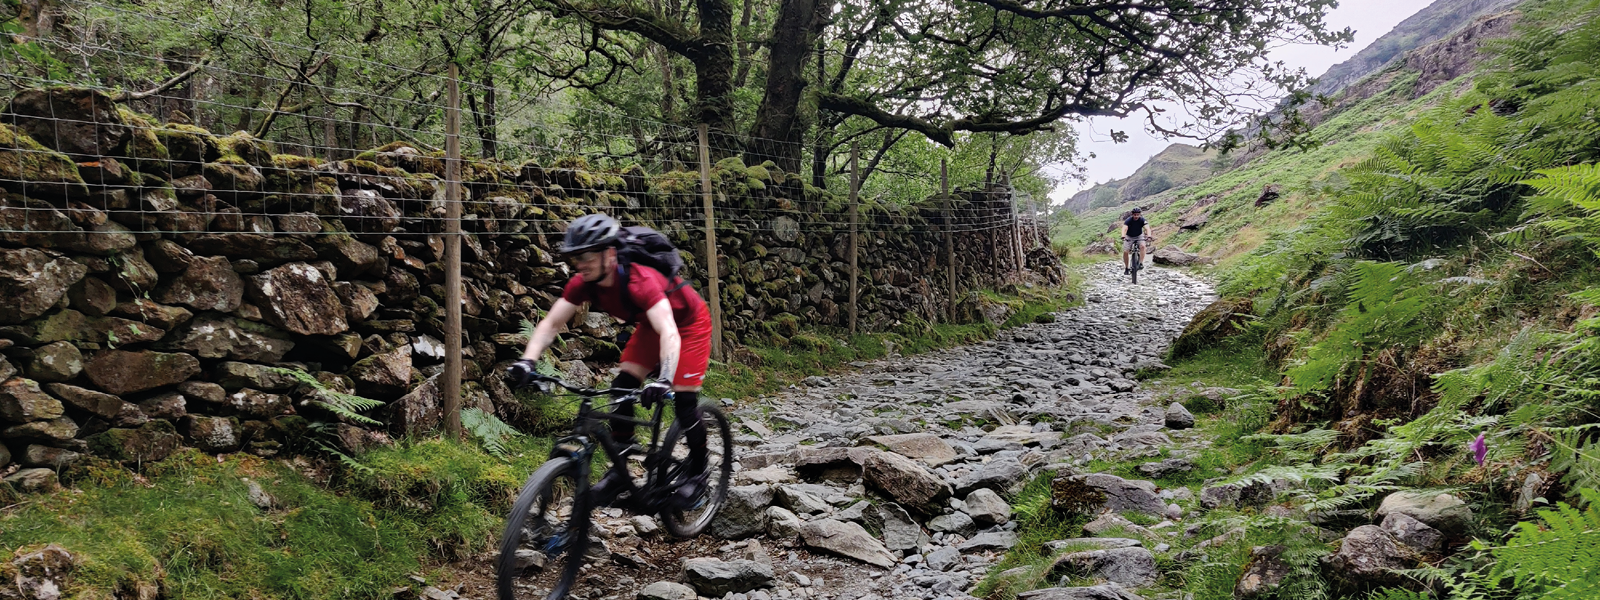 Two mountain bikers riding along a rocky path